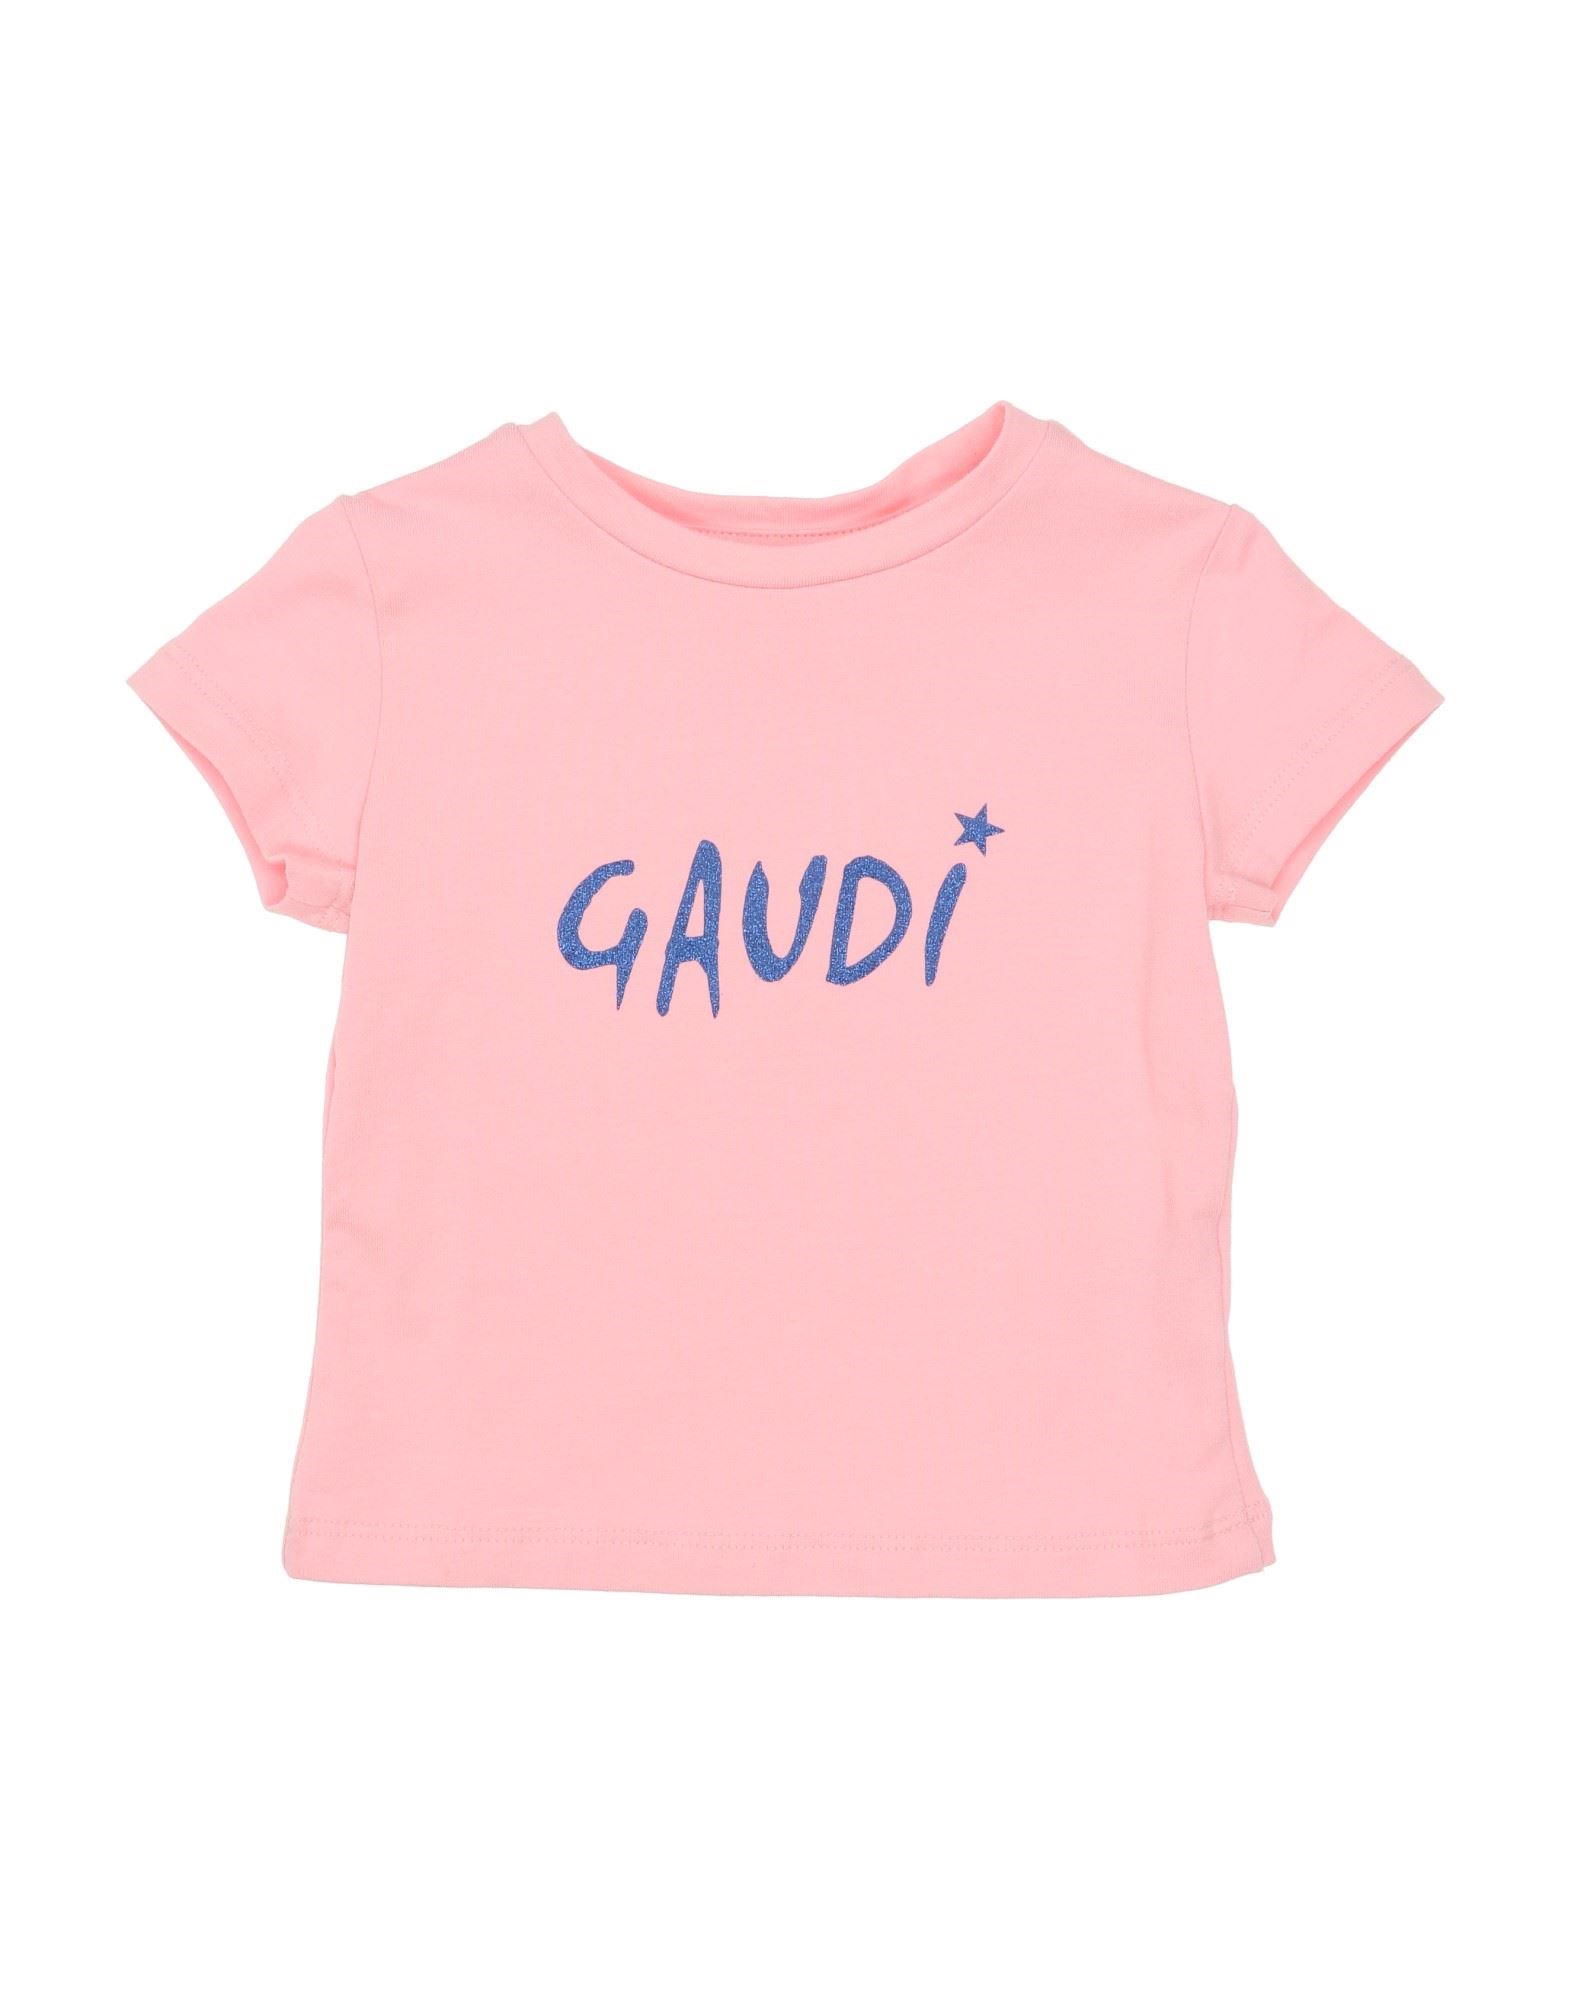 Gaudì Kids' T-shirts In Pink